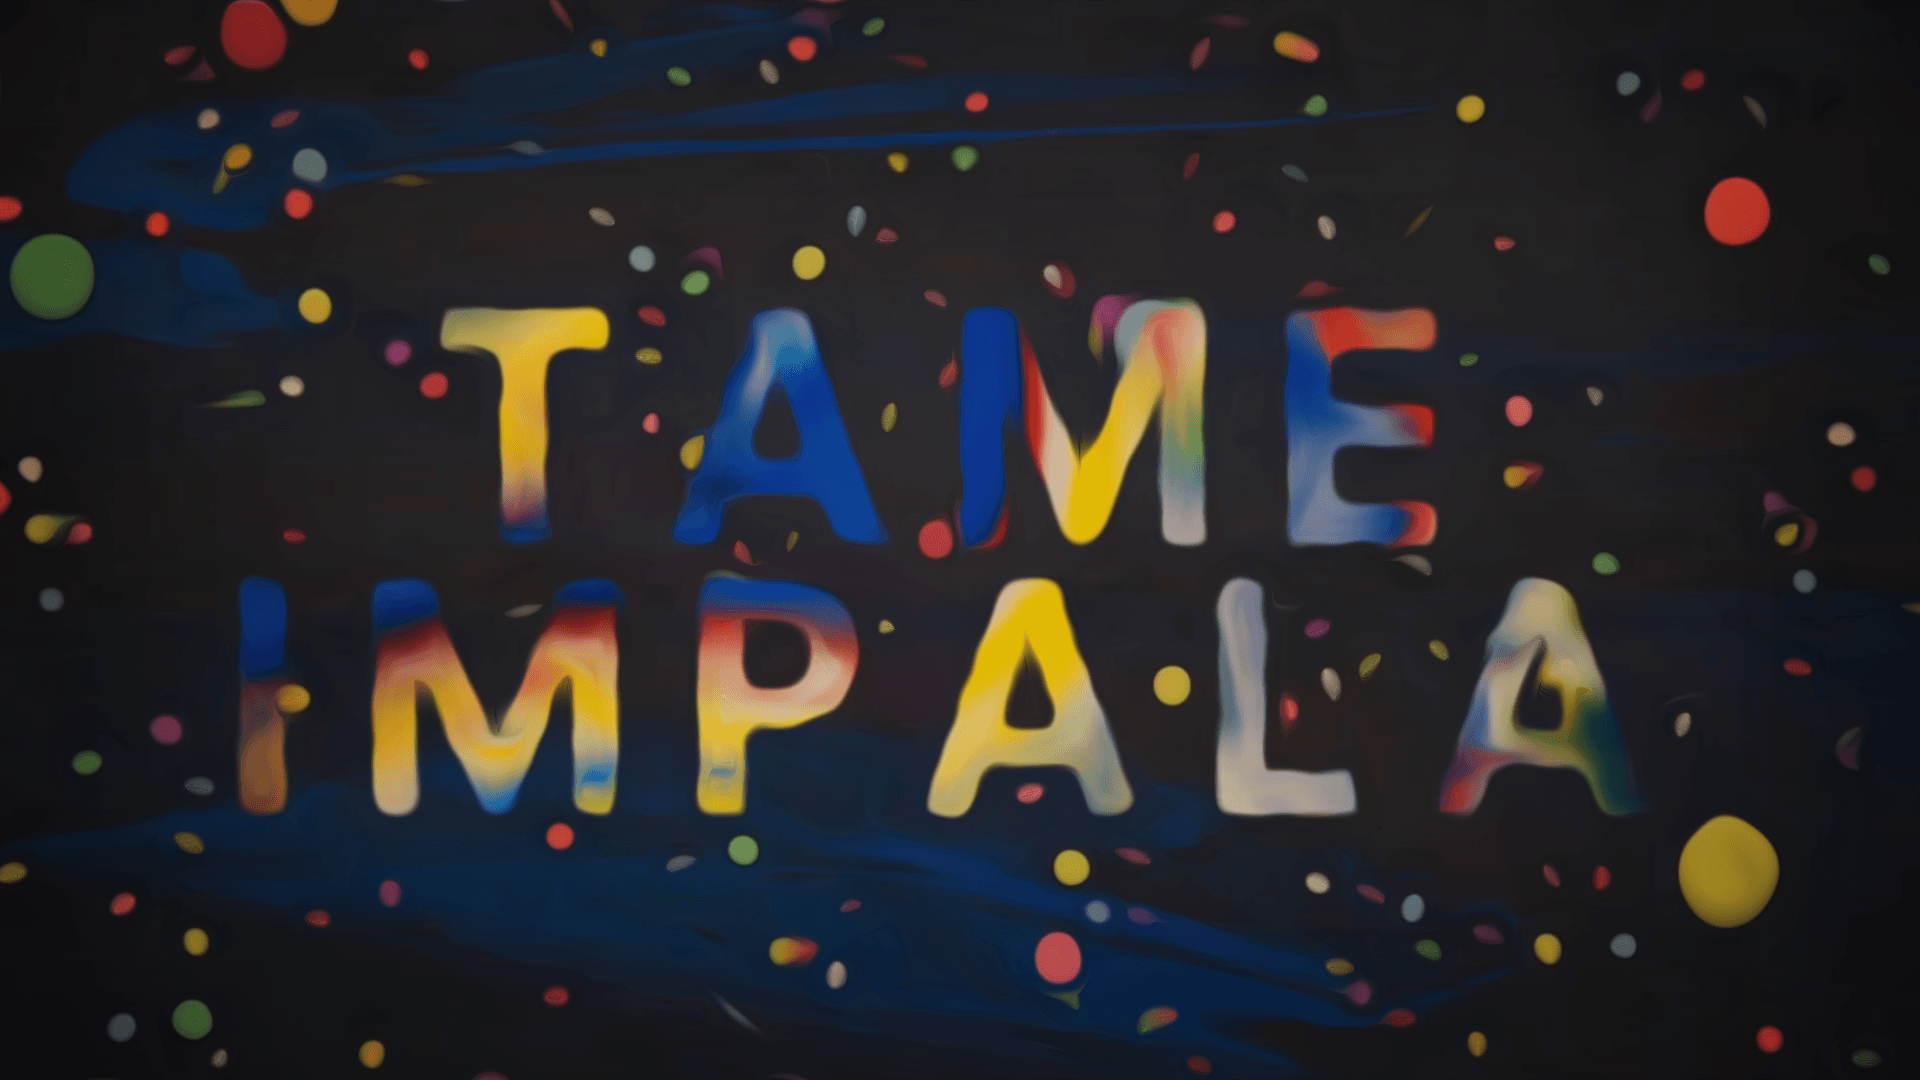 Tame Impala Wallpapers - Wallpaper Cave